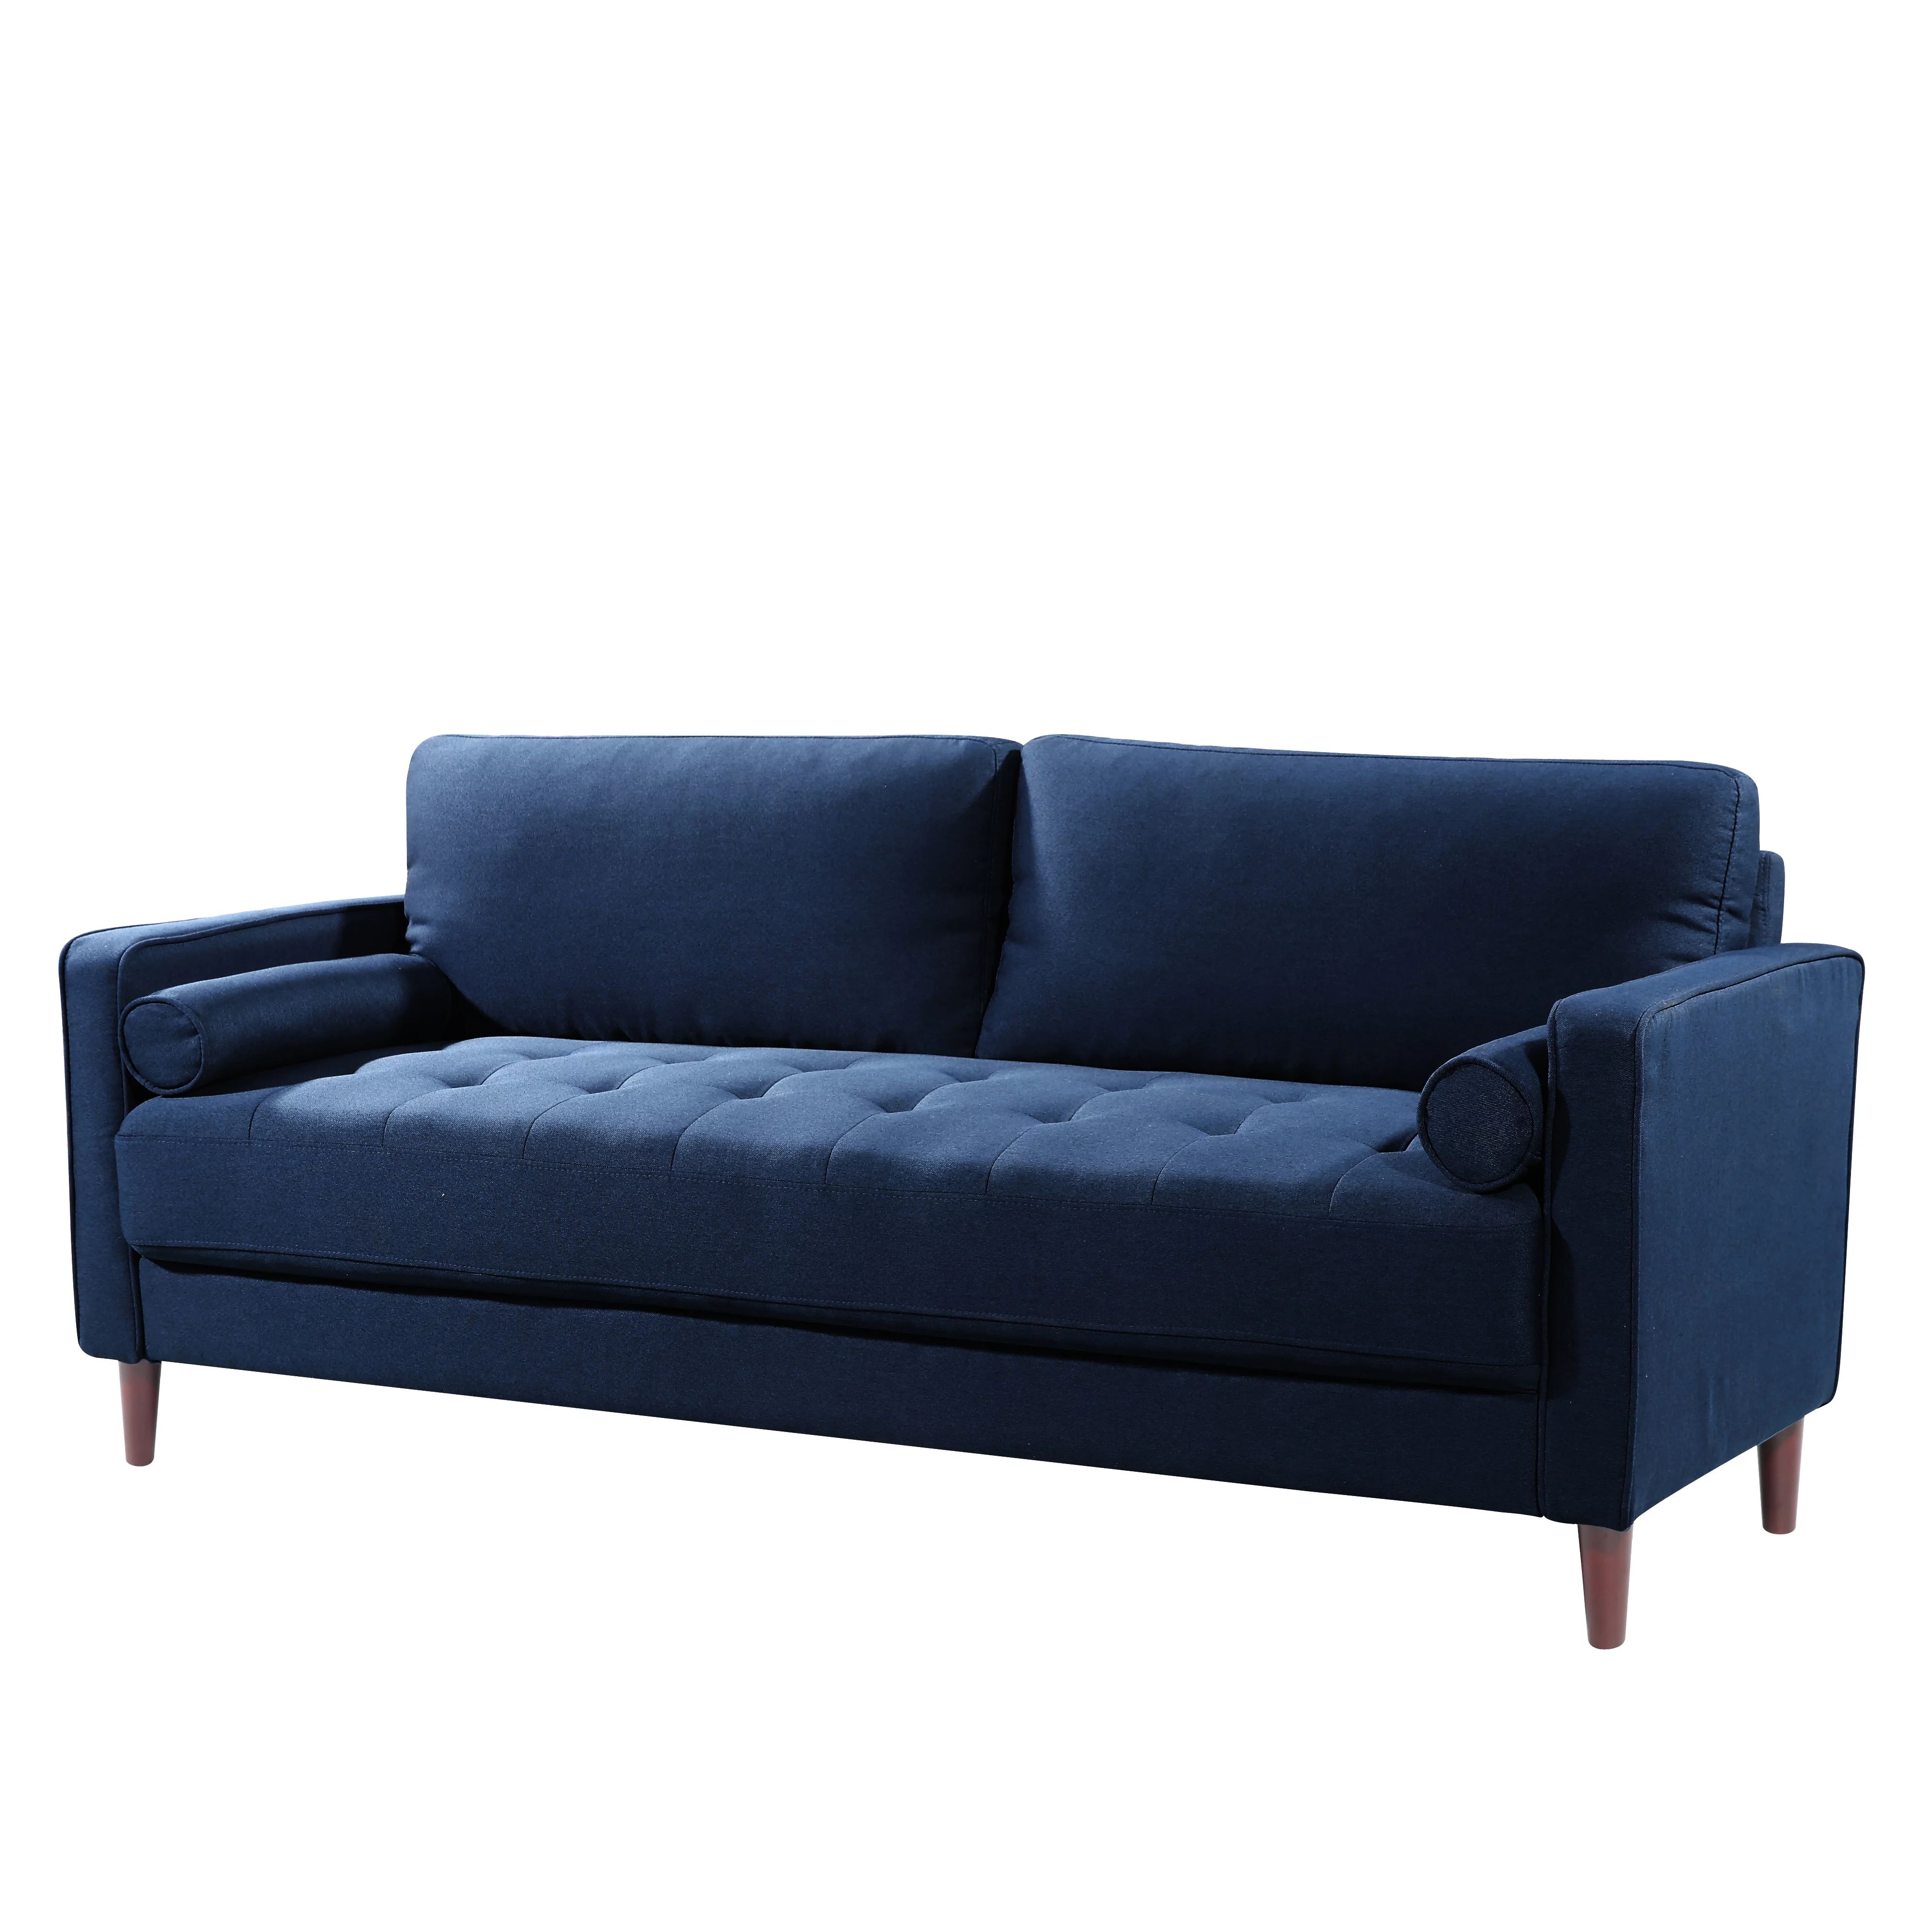 Lifestyle Solutions Lorelei Mid-Century Modern Sofa, Navy Blue Fabric | Walmart (US)